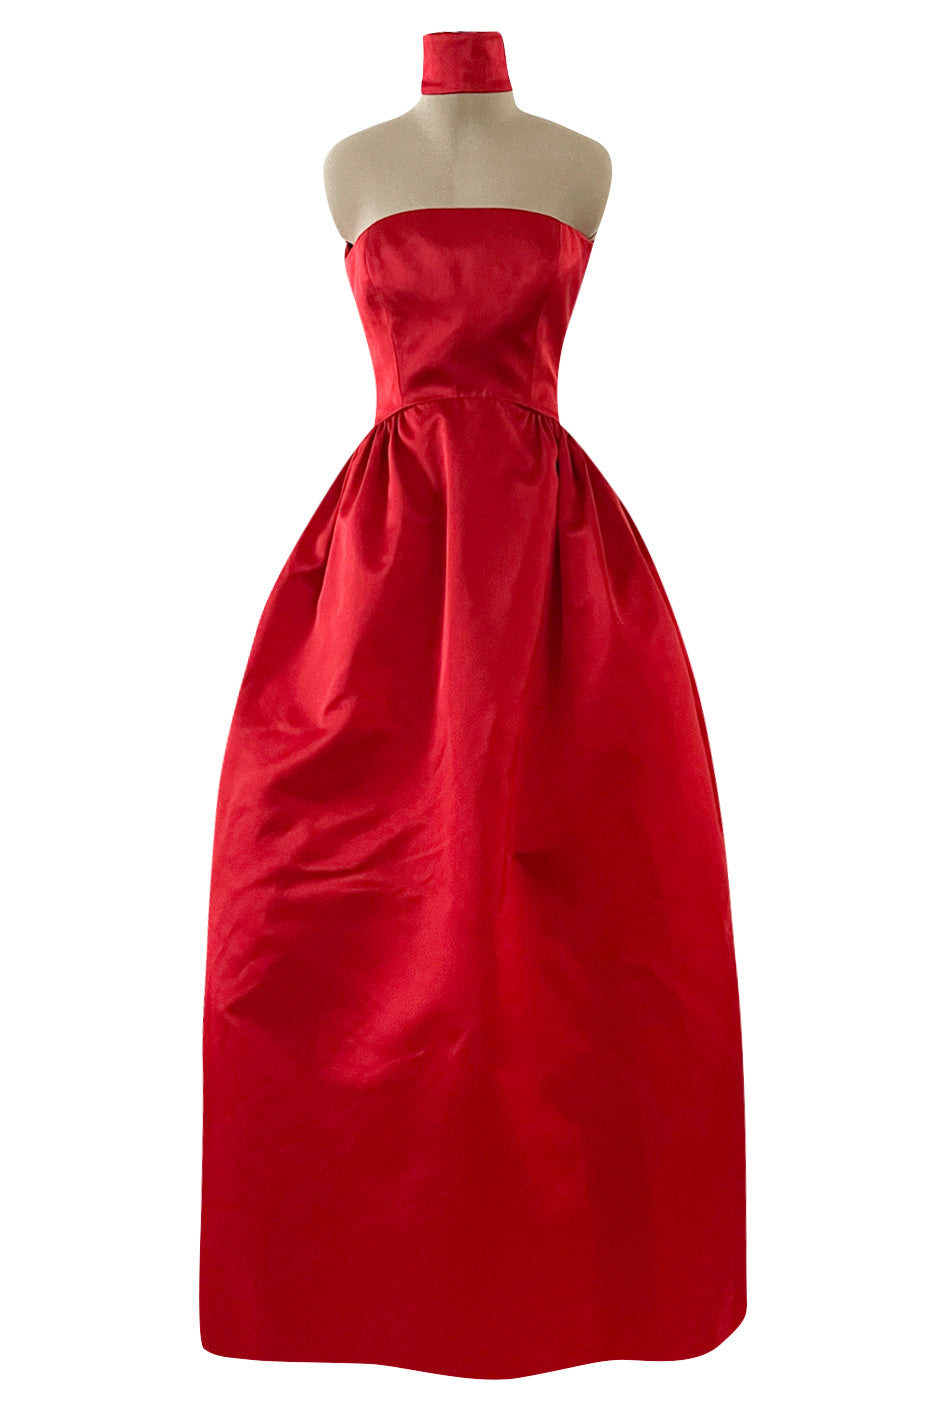 Saks Fifth Avenue, Dresses, Red Saks 5th Avenue Dress 4 Striped Petticoat